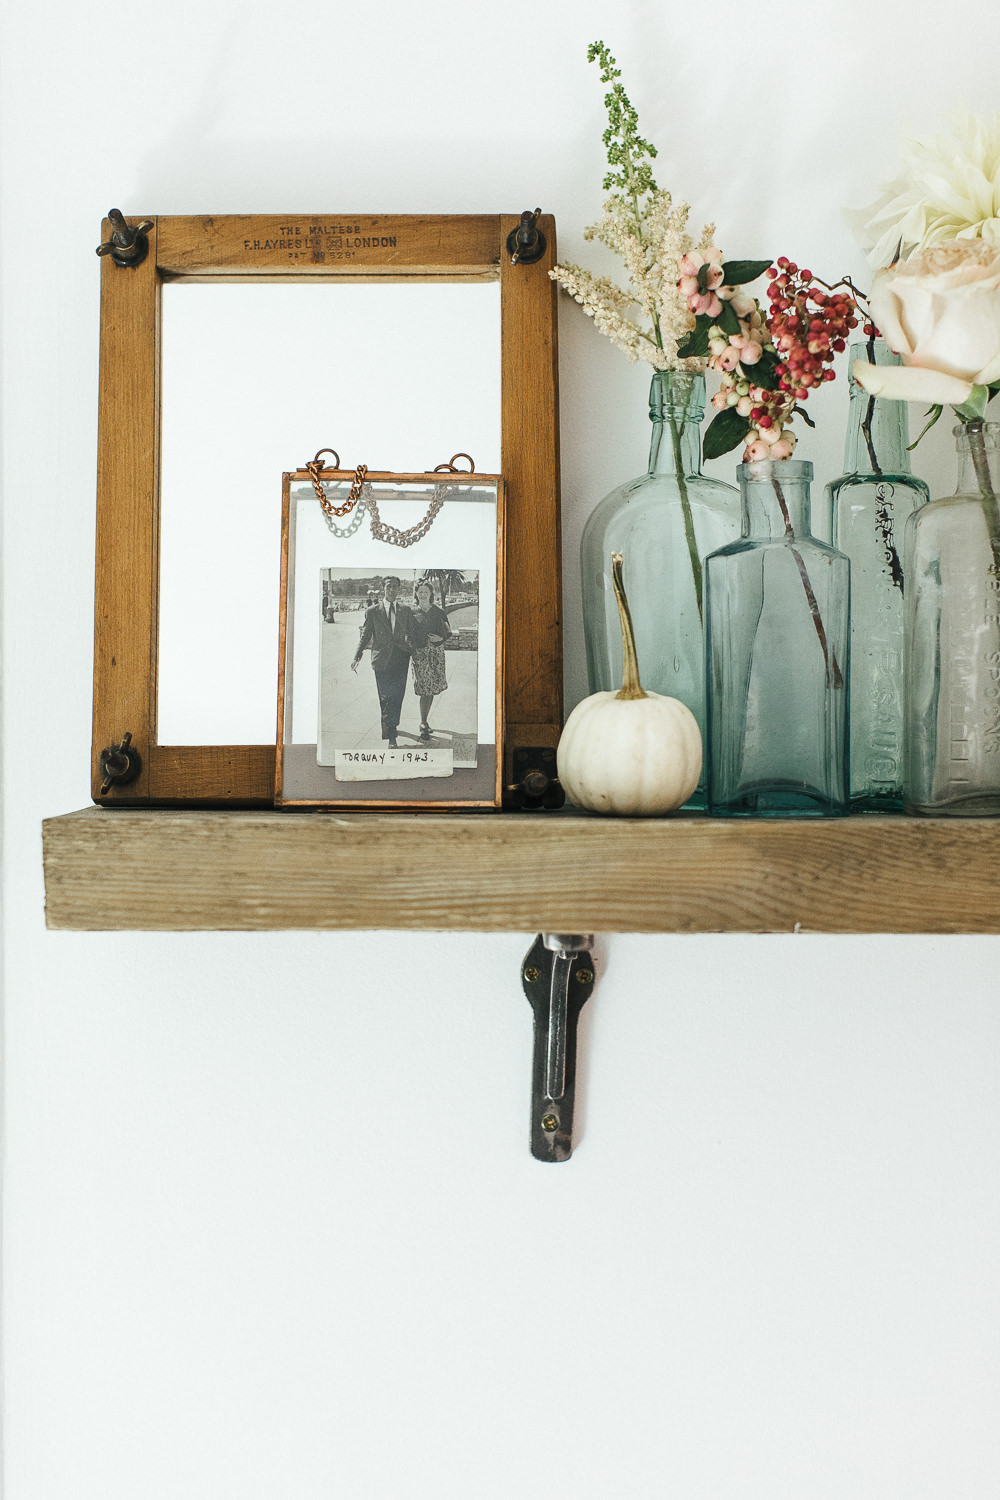 Vintage photo in copper frame on reclaimed wooden shelf